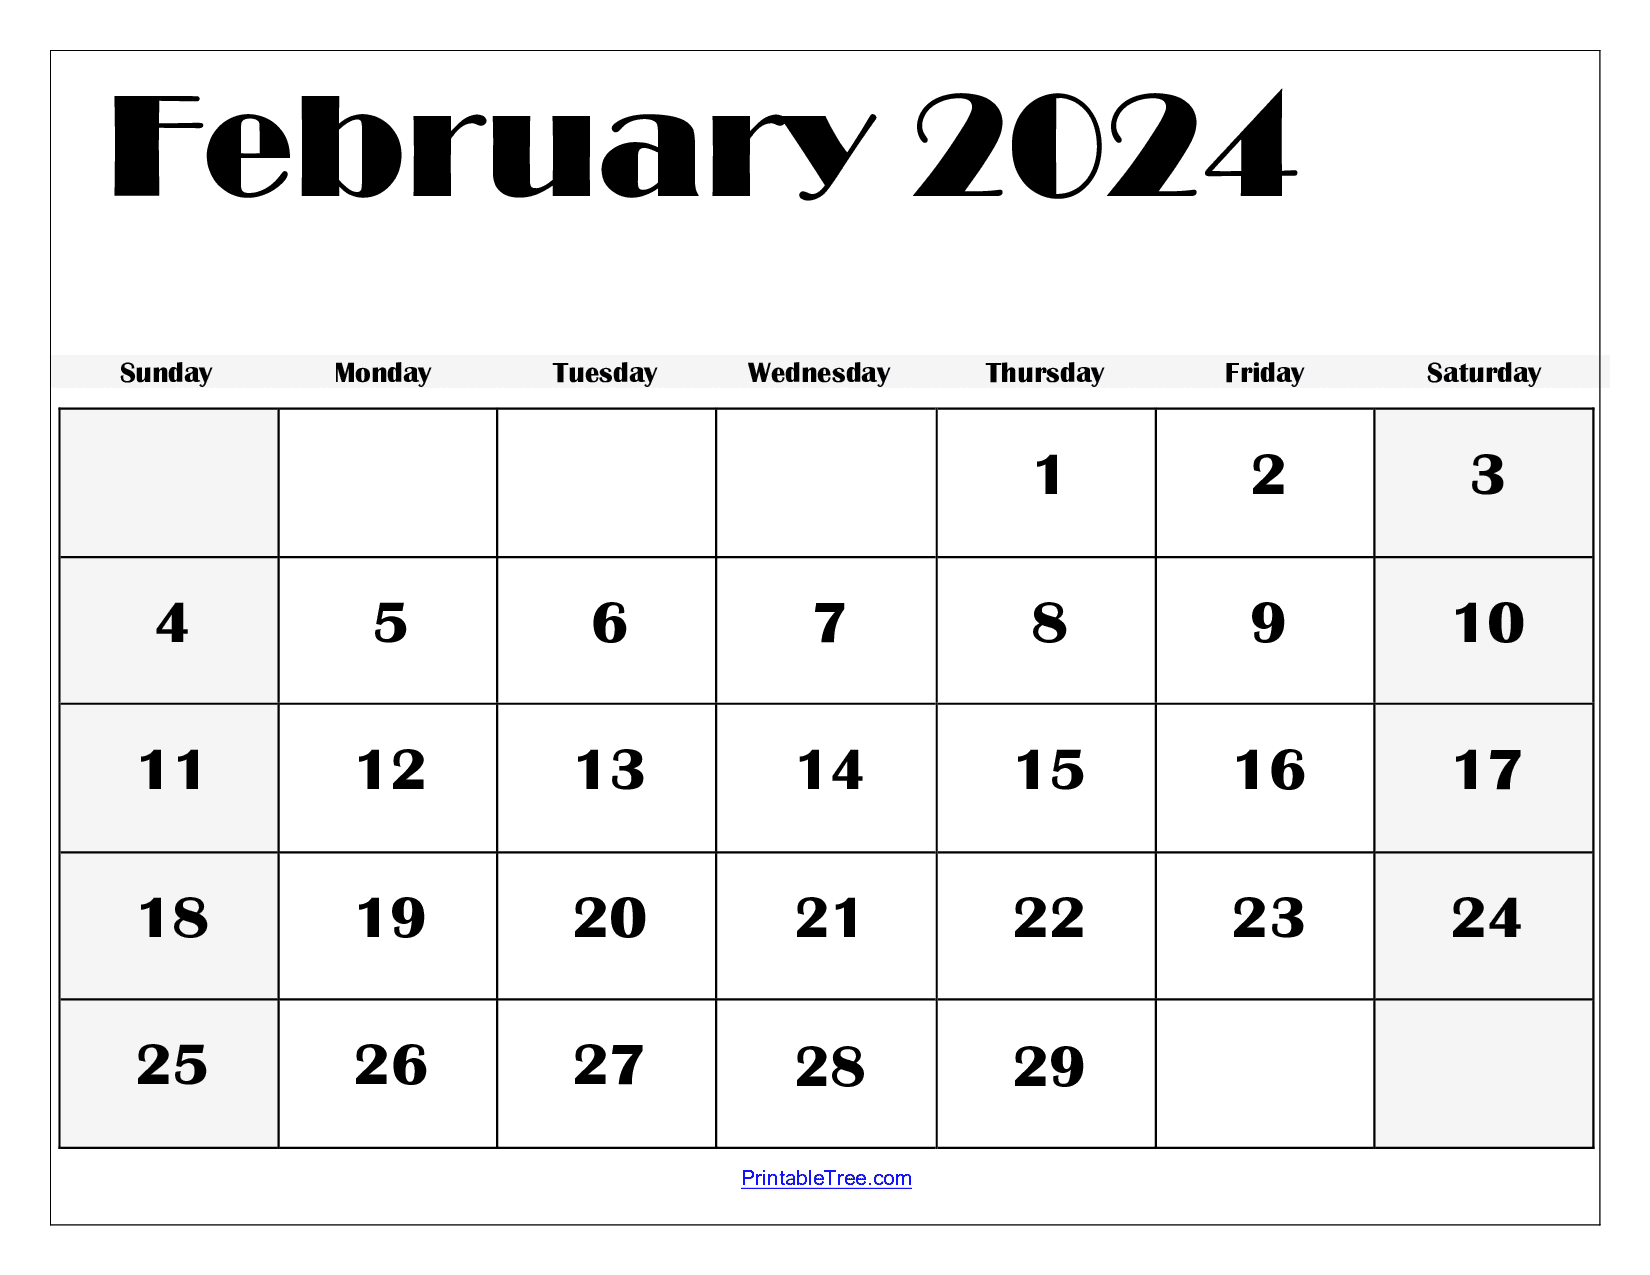 February 2024 Calendar Printable Pdf Template With Holidays for Blank Feb 2024 Calendar Printable